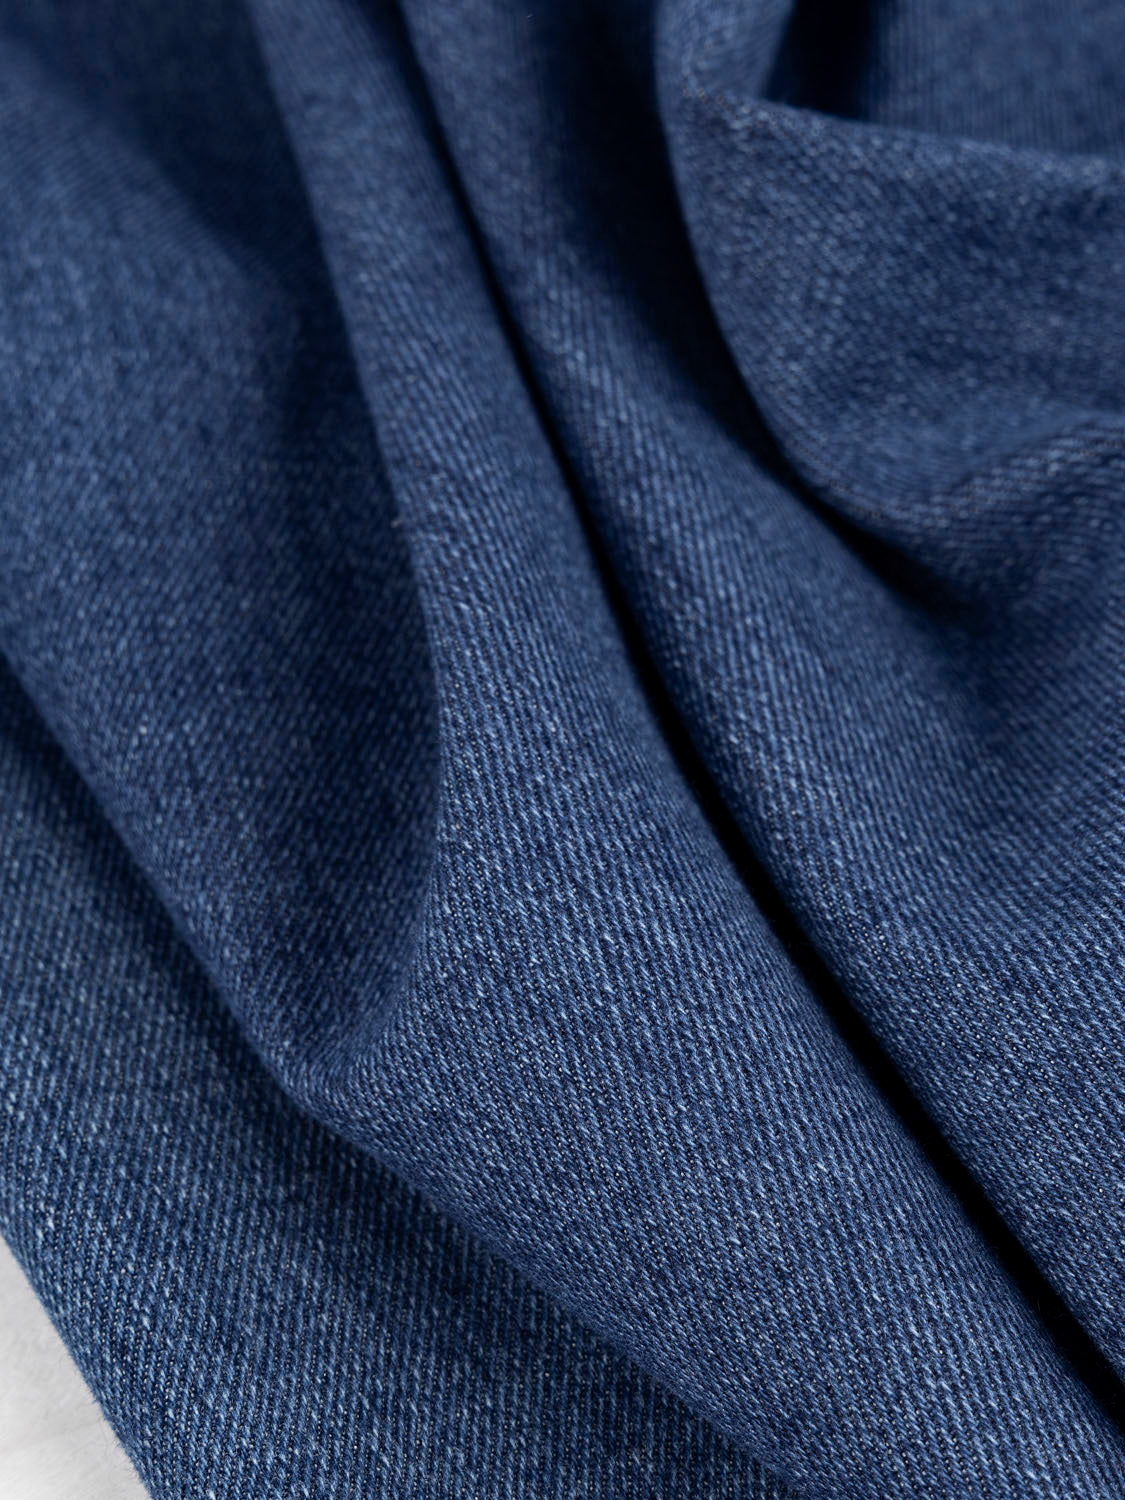 Fabric by the Yard – Cotton Denim